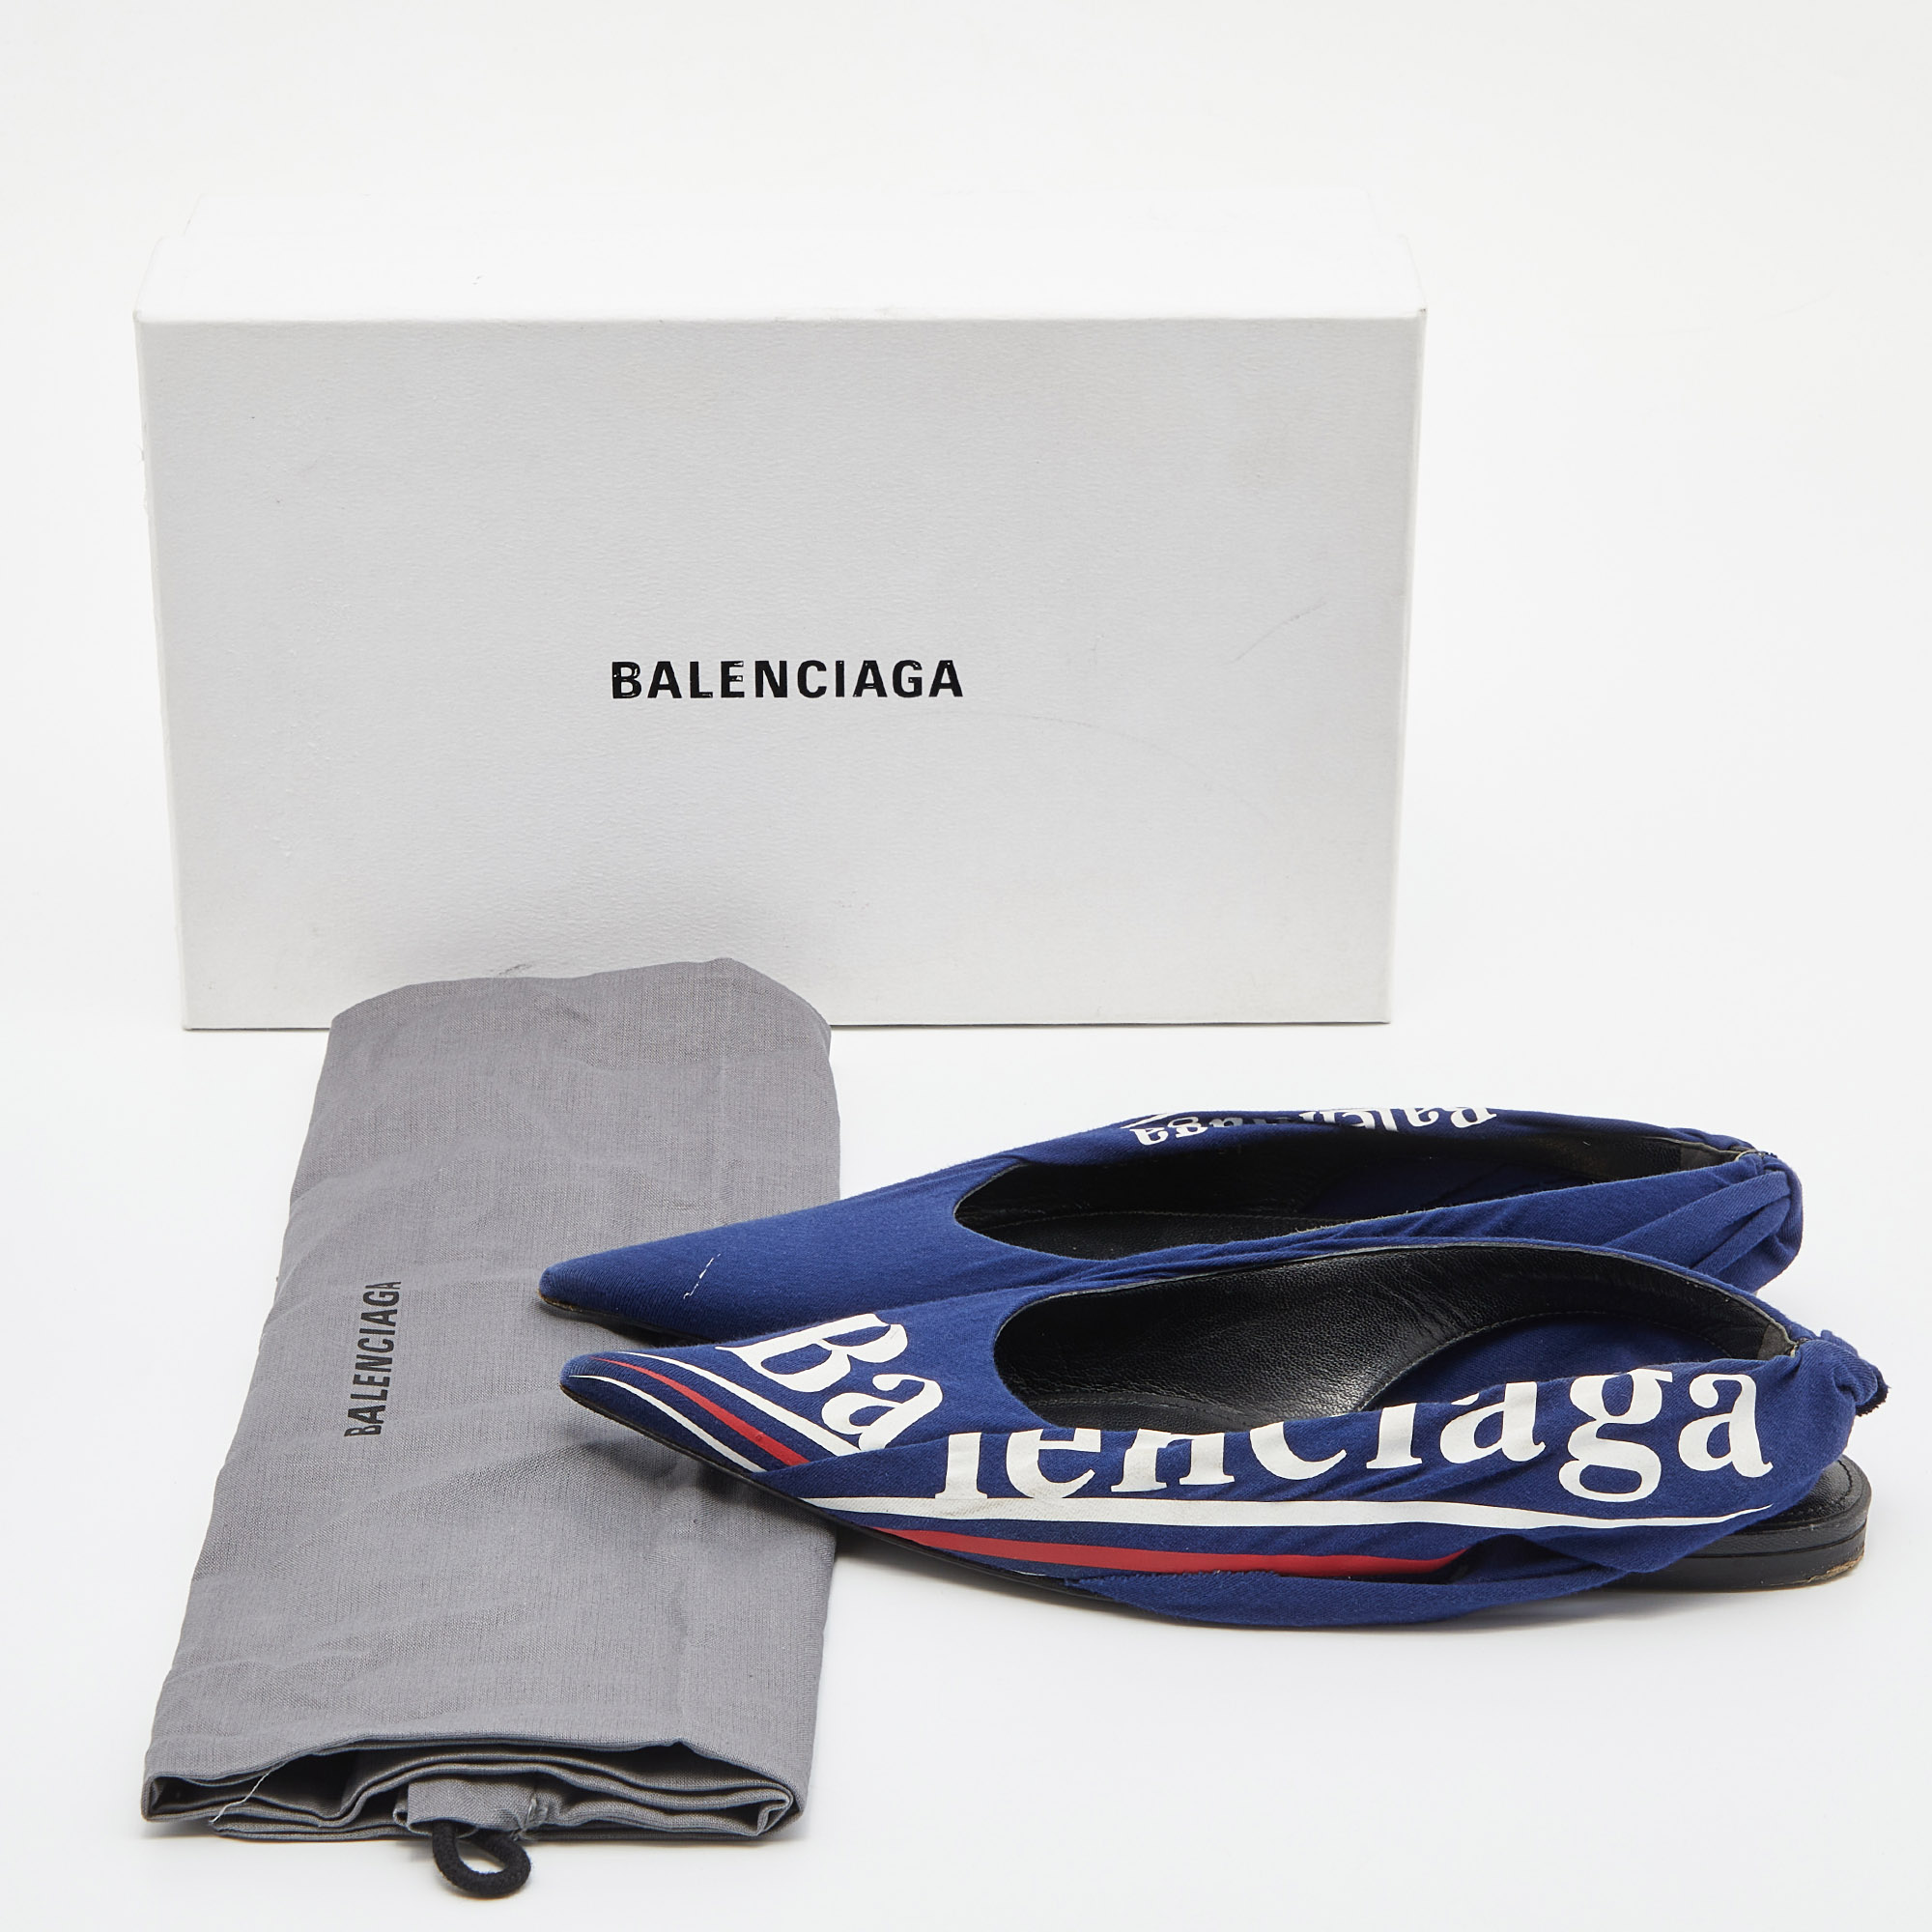 Balenciaga Blue Print Fabric Knife Pointed Toe Slingback Flat Sandals Size 37